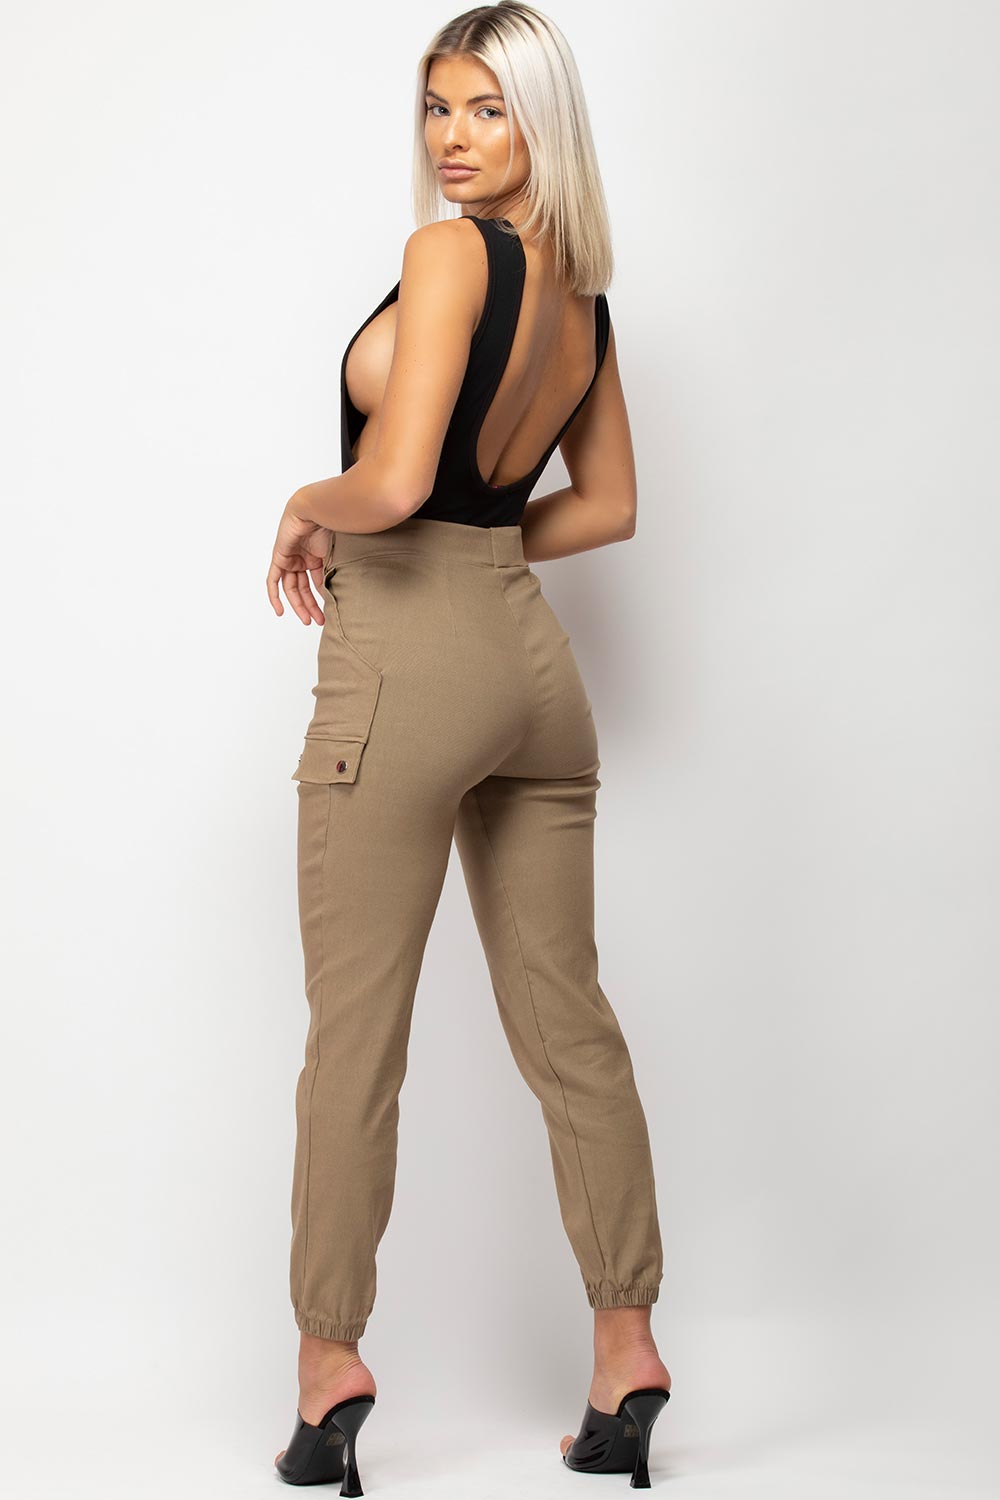 Vaude Farley Stretch Zip Off Pants II - Walking Trousers Women's | Free UK  Delivery | Alpinetrek.co.uk